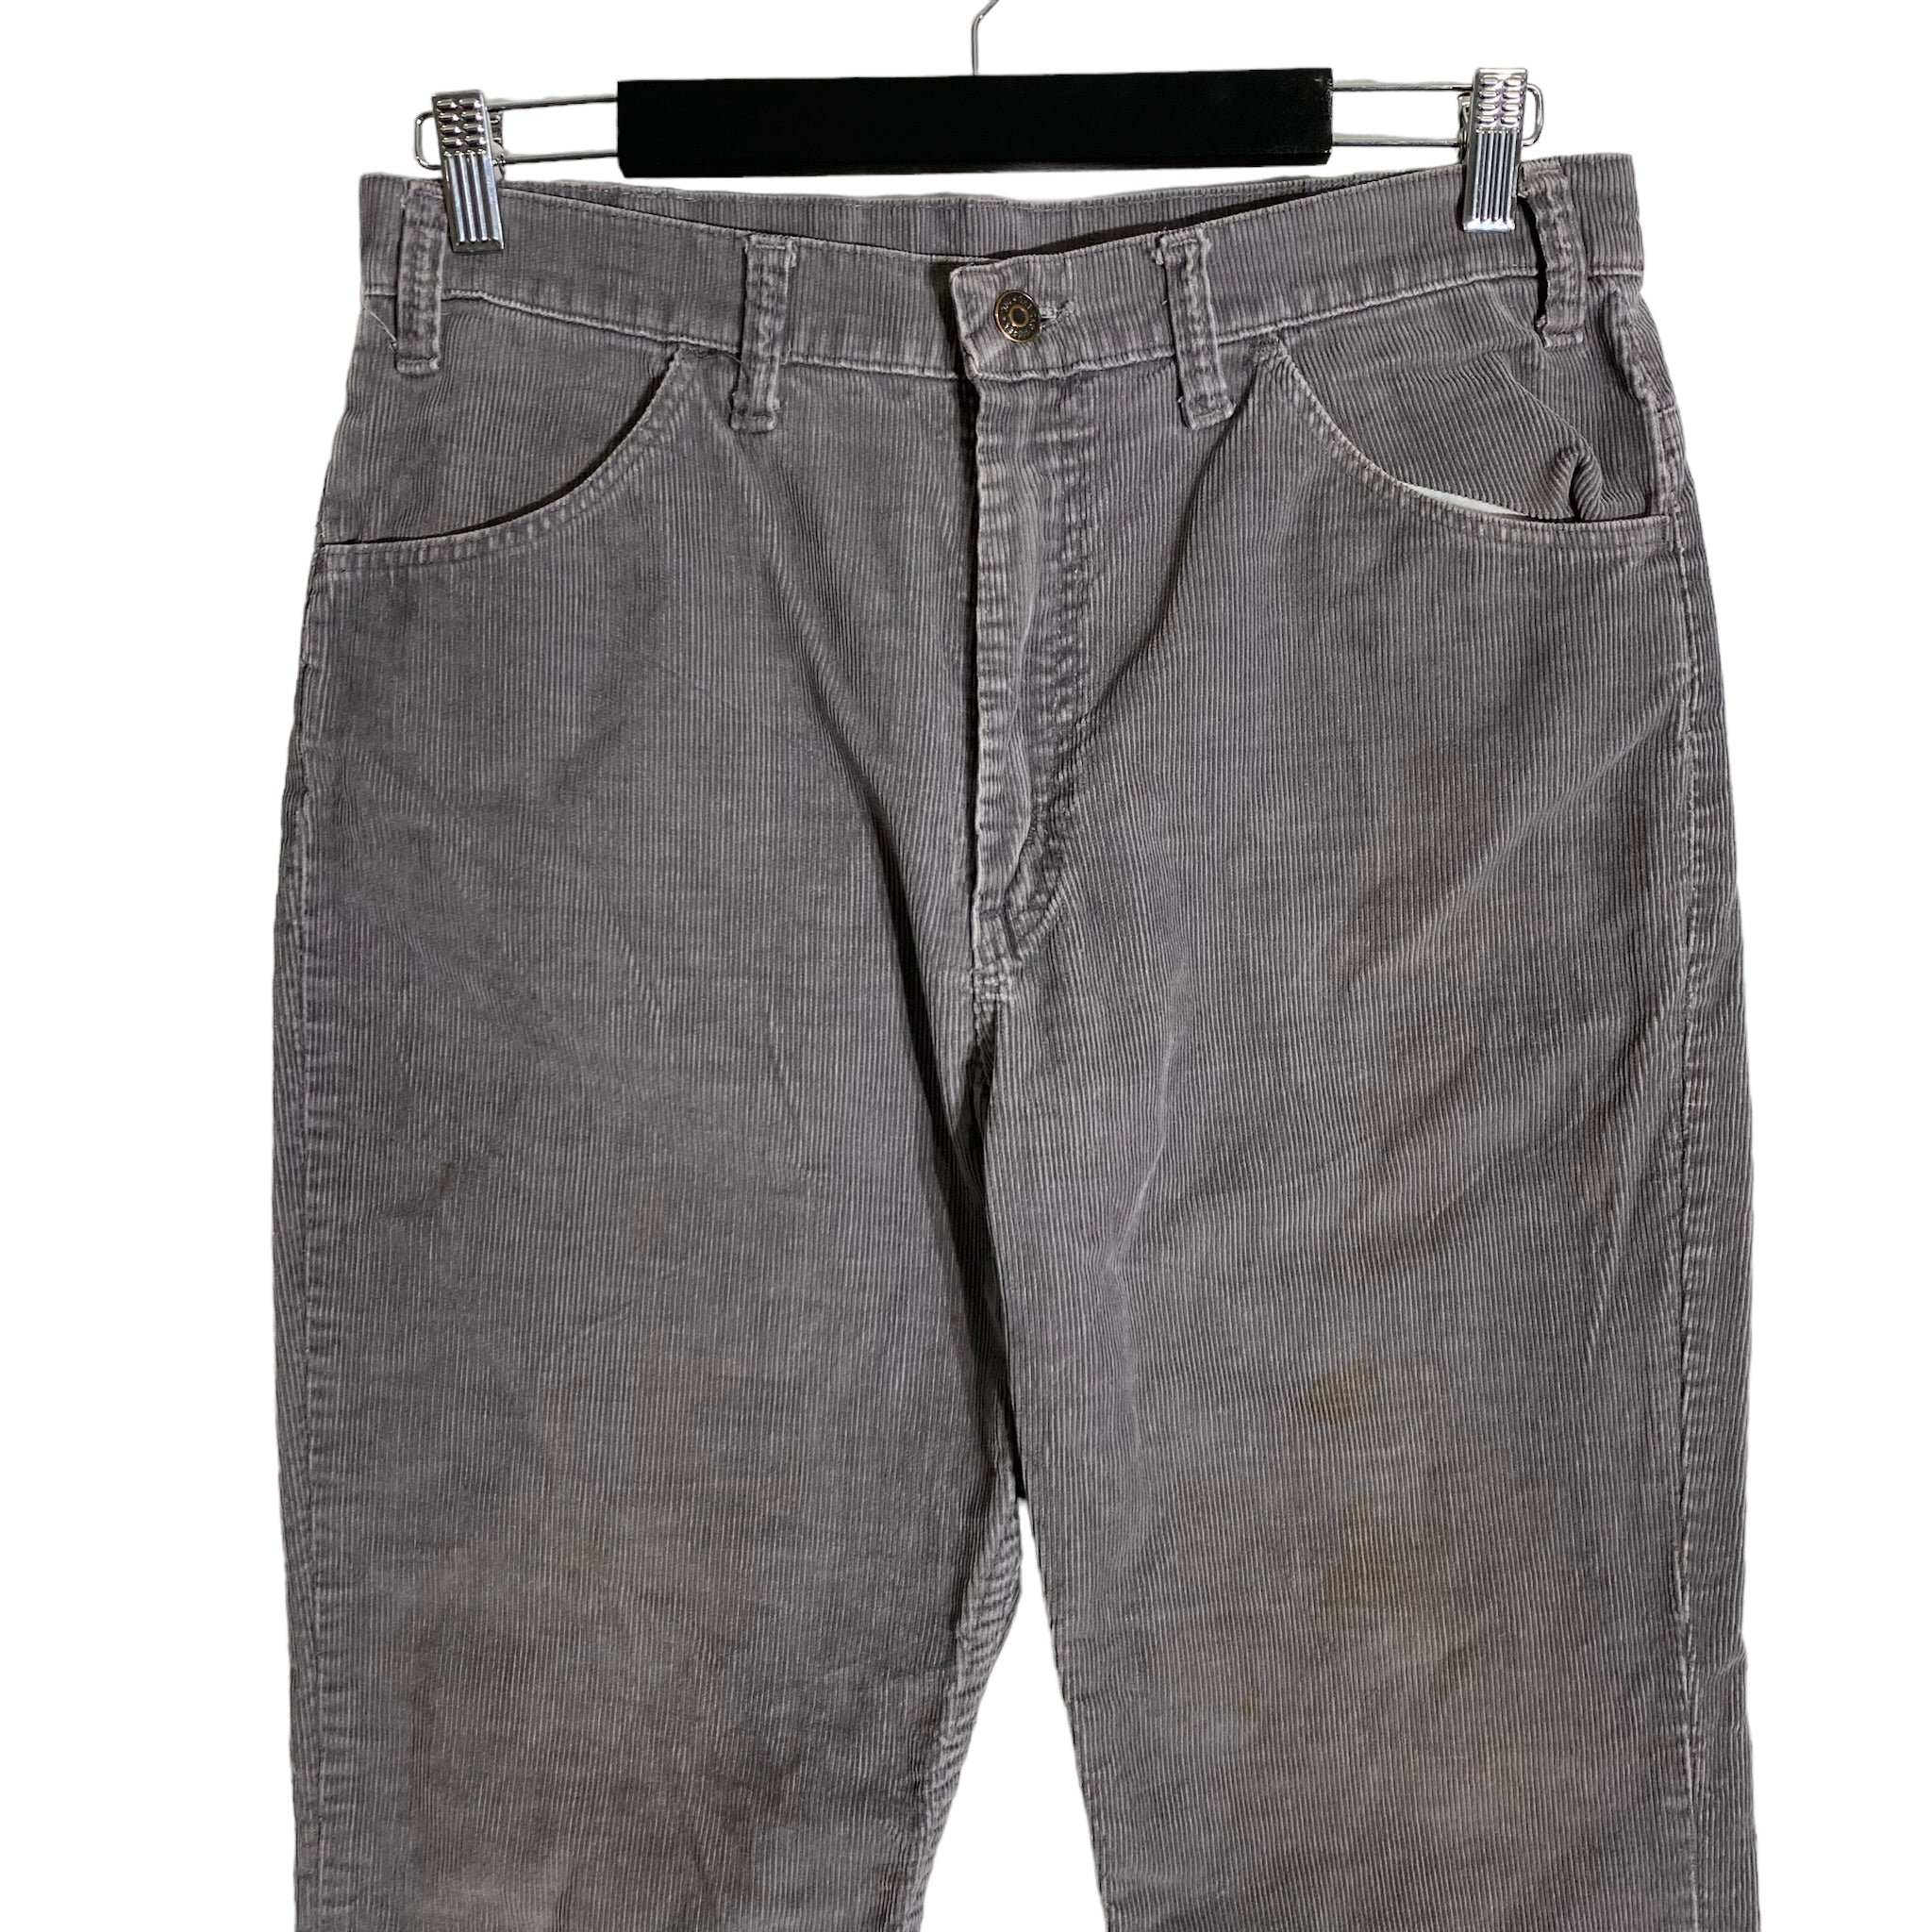 Vintage GAP Corduroy Pants 90s